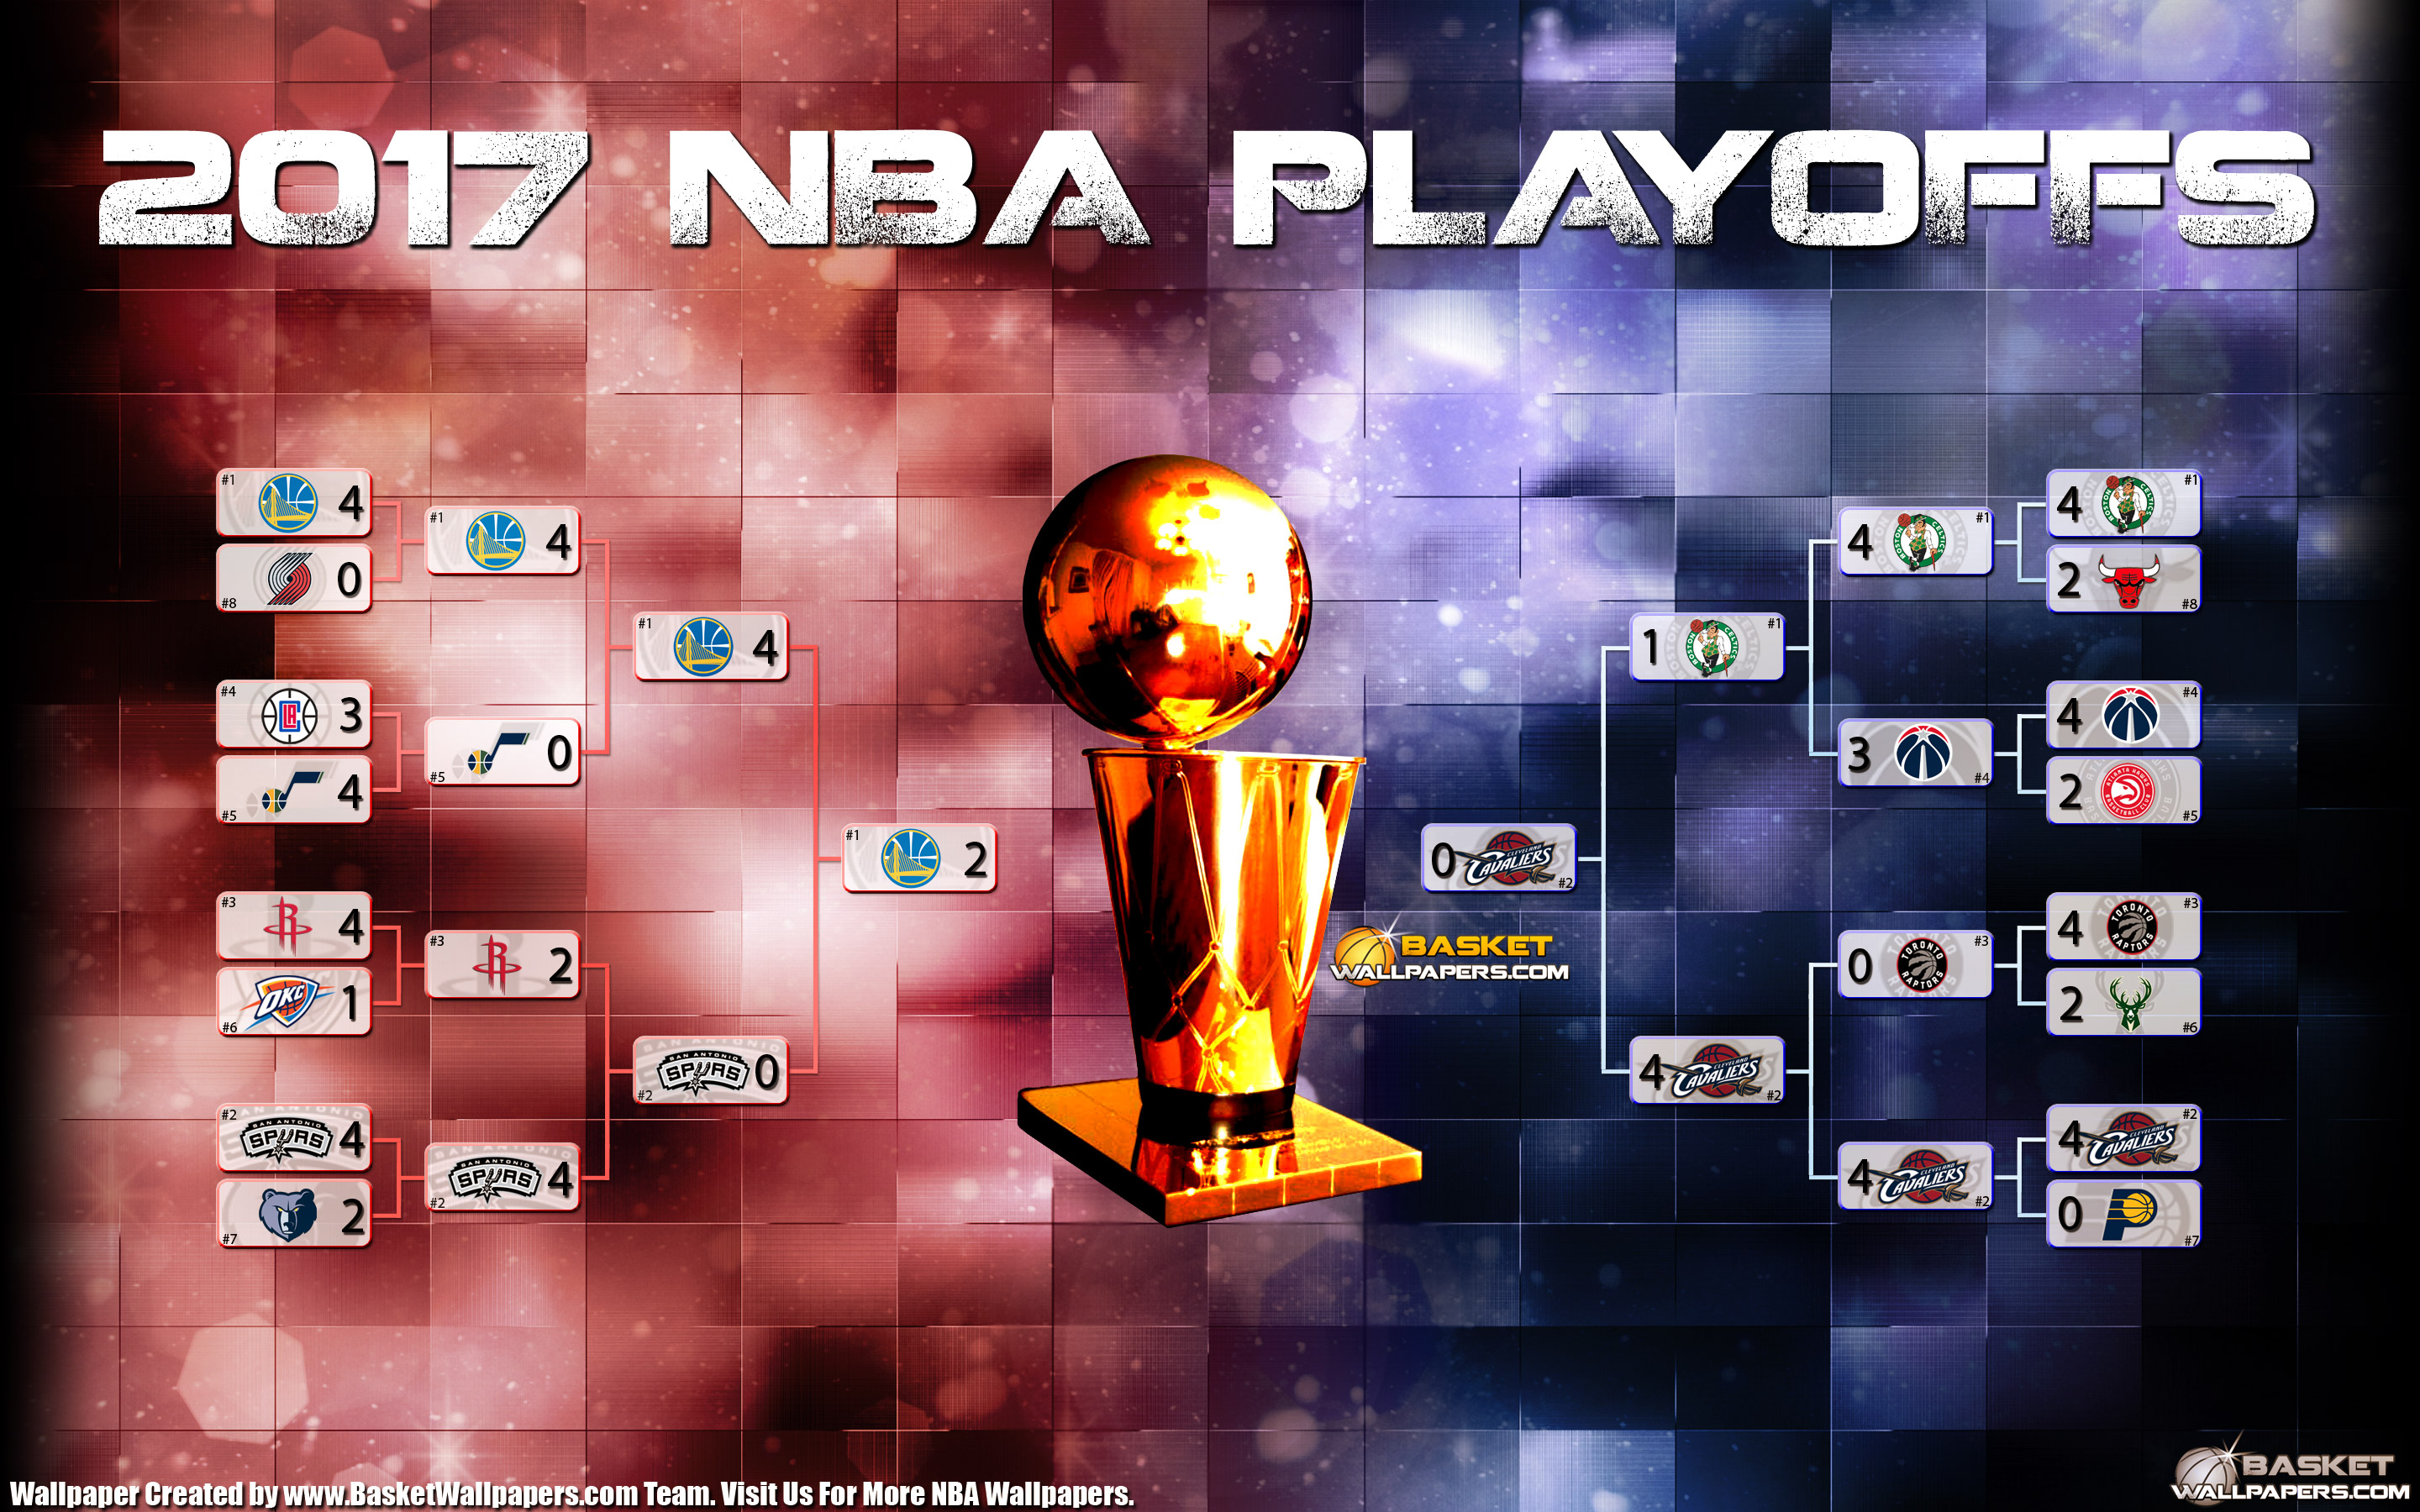 2012 NBA Playoffs Bracket